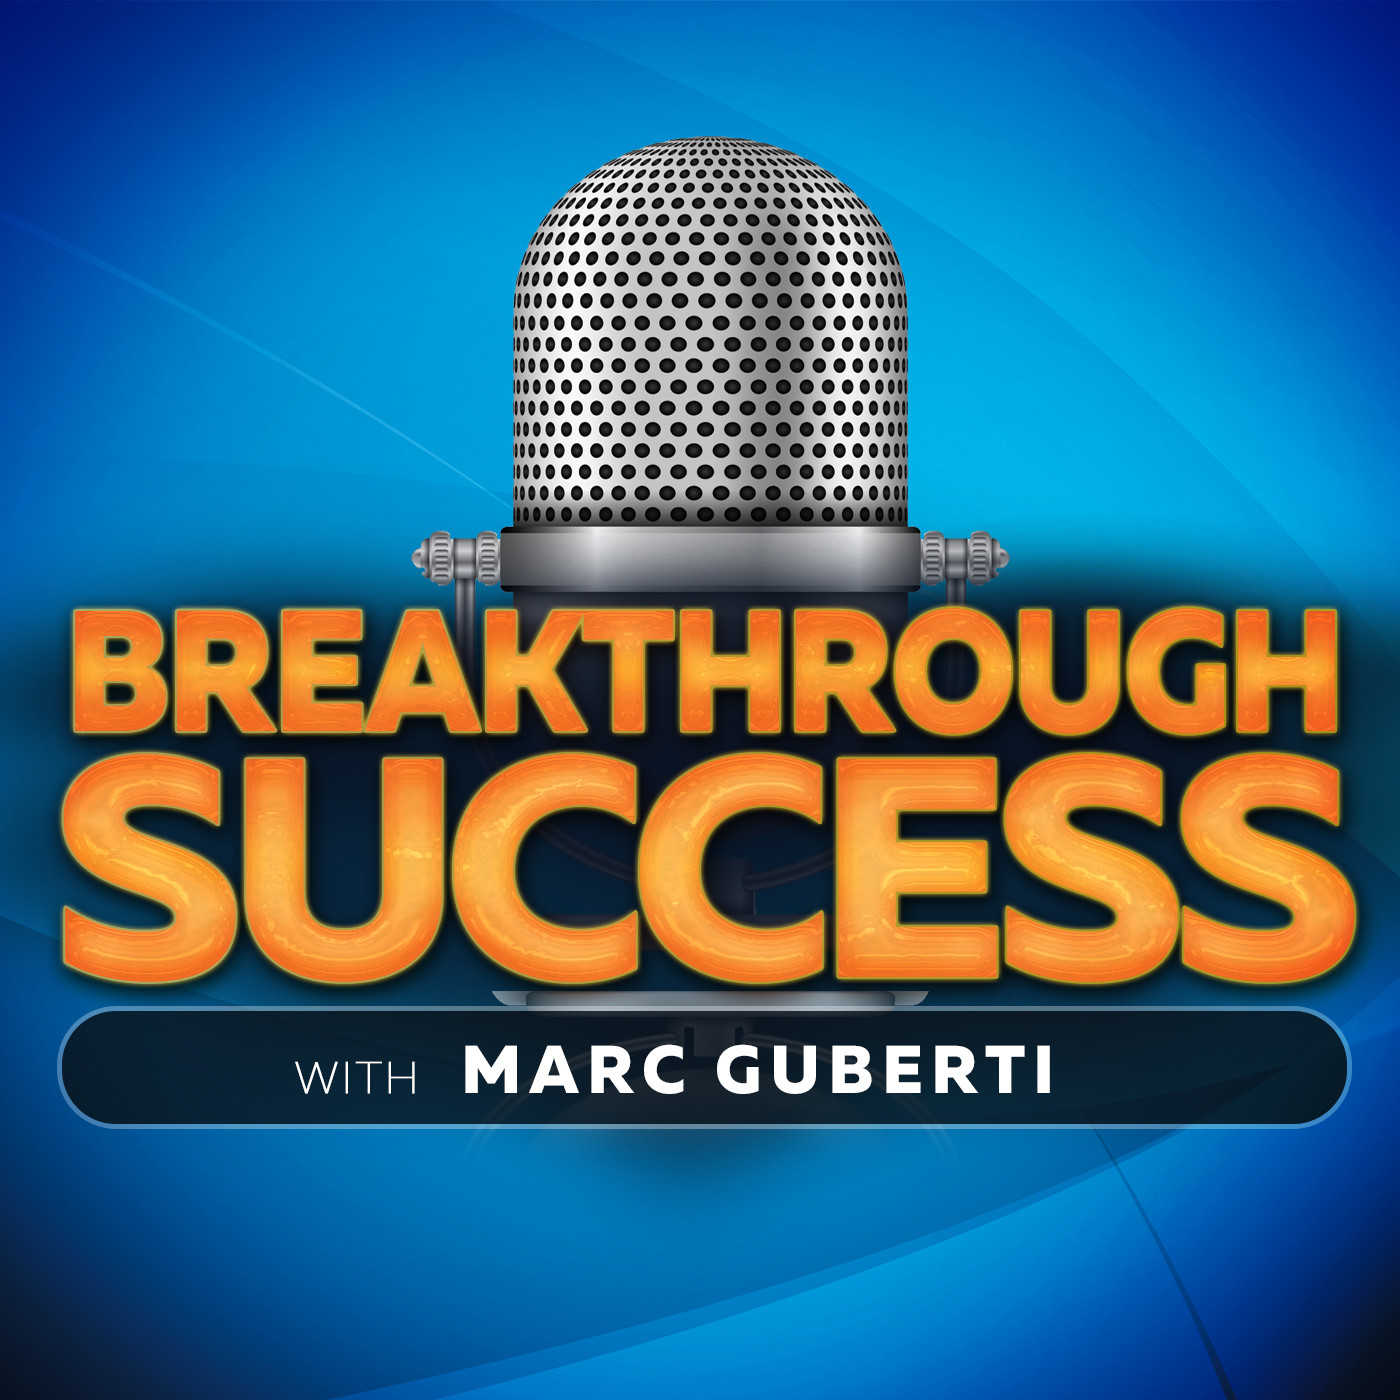 Artwork for podcast Breakthrough Success